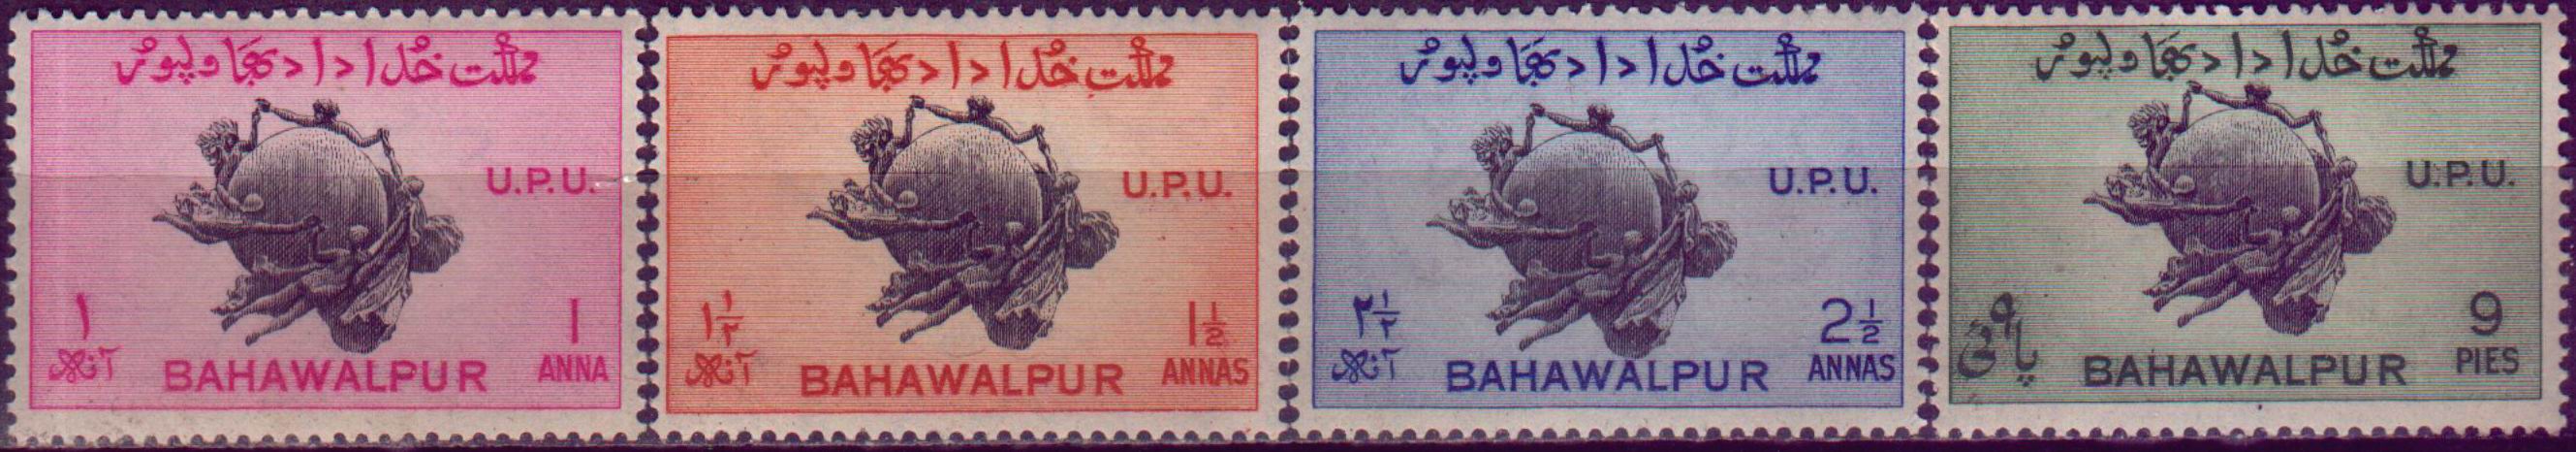 Pakistan Bahawalpur 1949 Anniversary Of UPU MNH